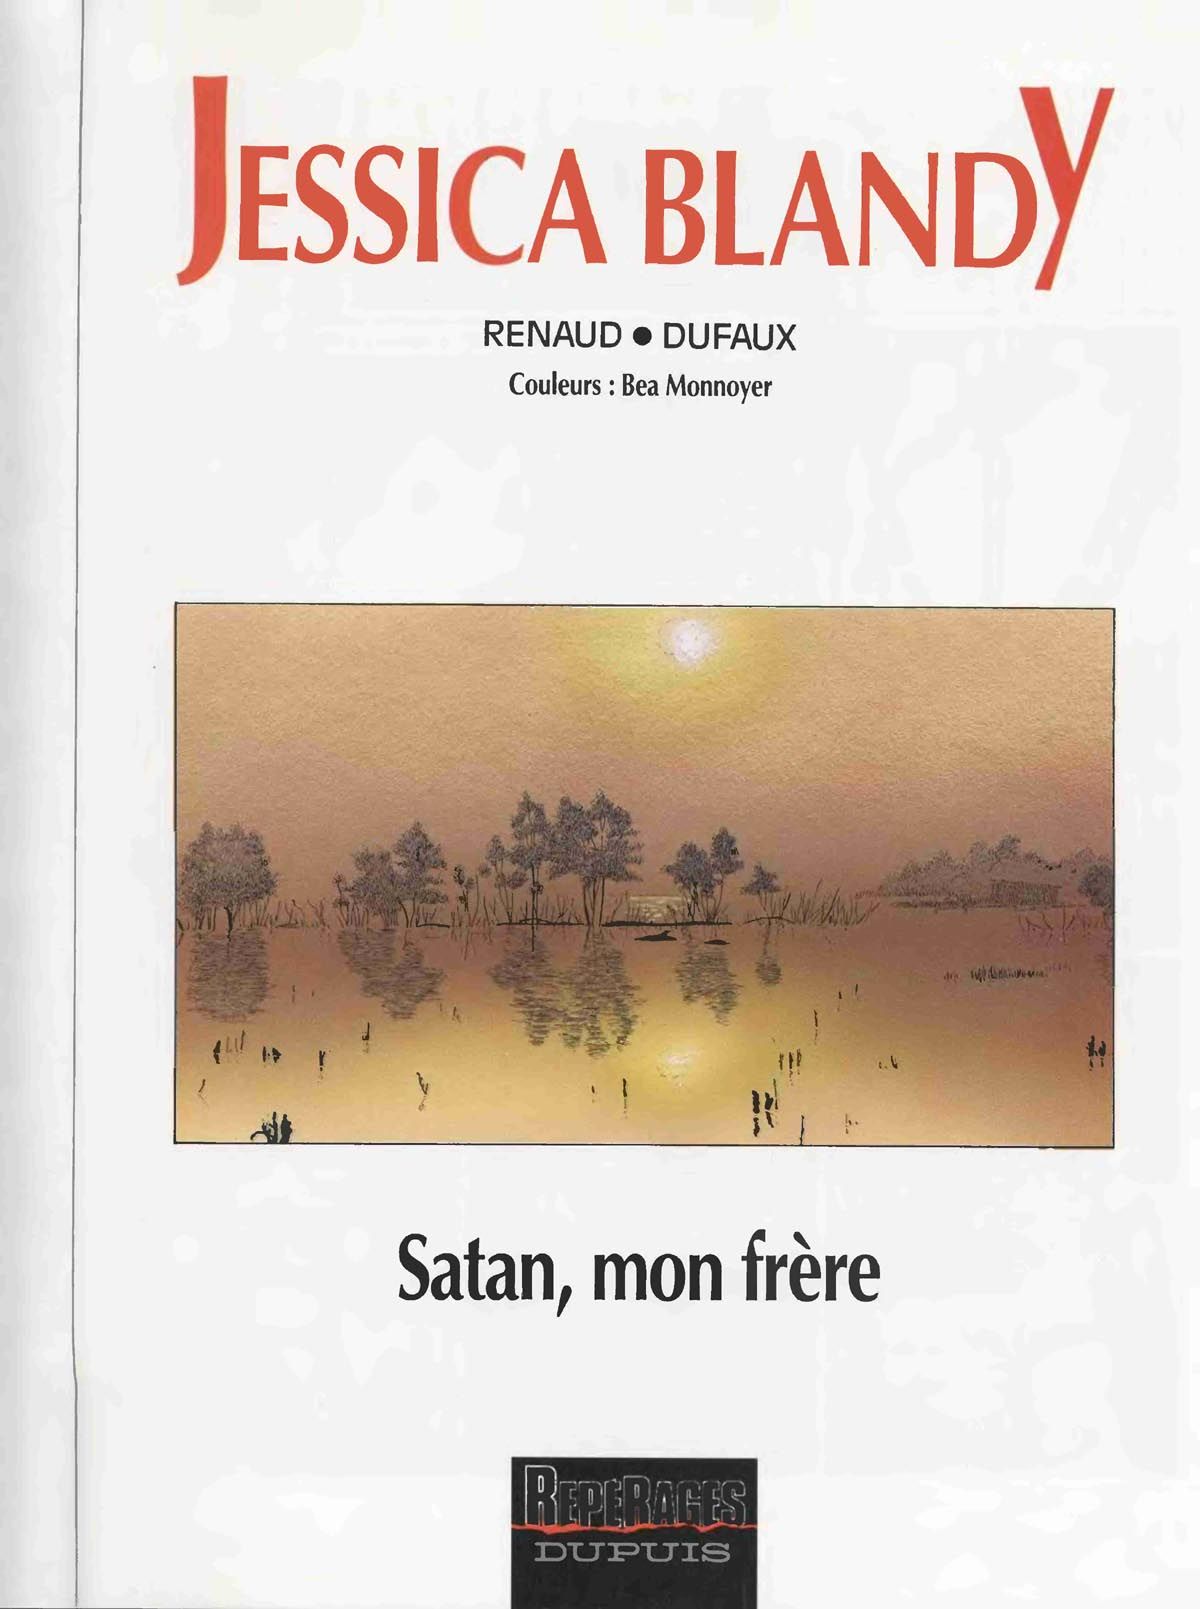 [Renaud, Dufaux] Jessica Blandy - 09 - Satan mon frere [French] 2